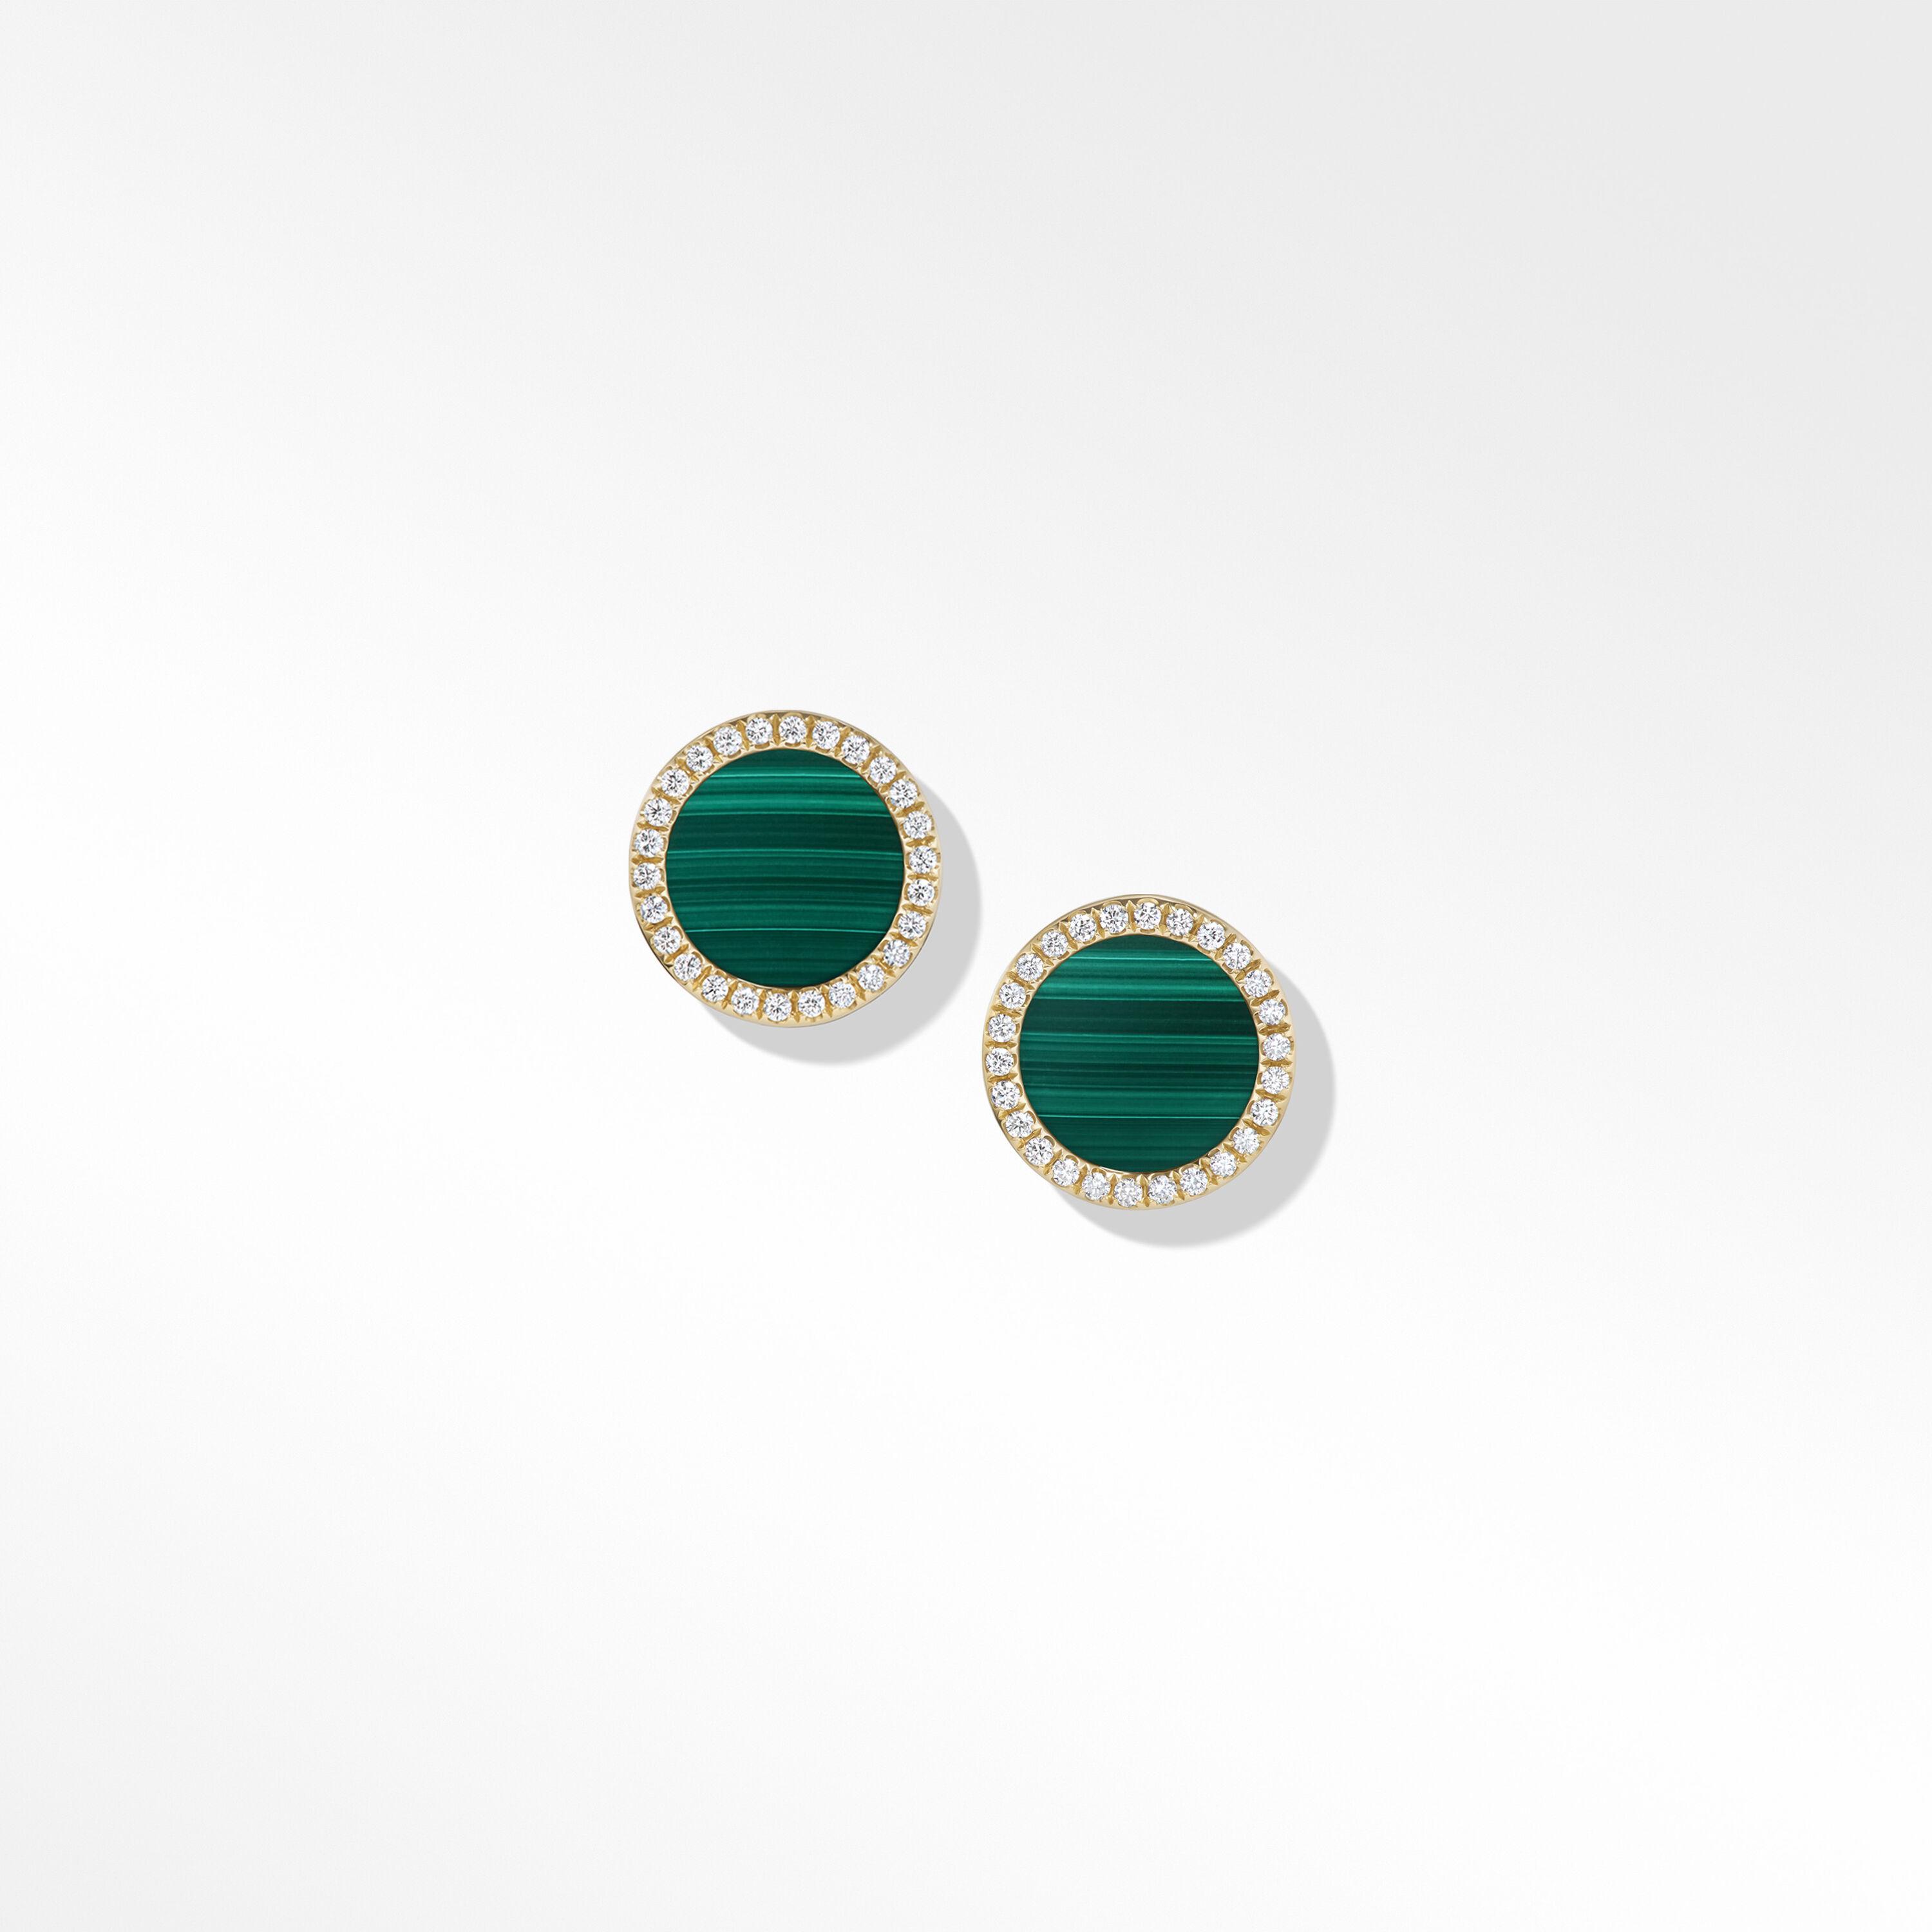 David Yurman Petite DY Elements Stud Earrings with Malachite and Pave Diamonds